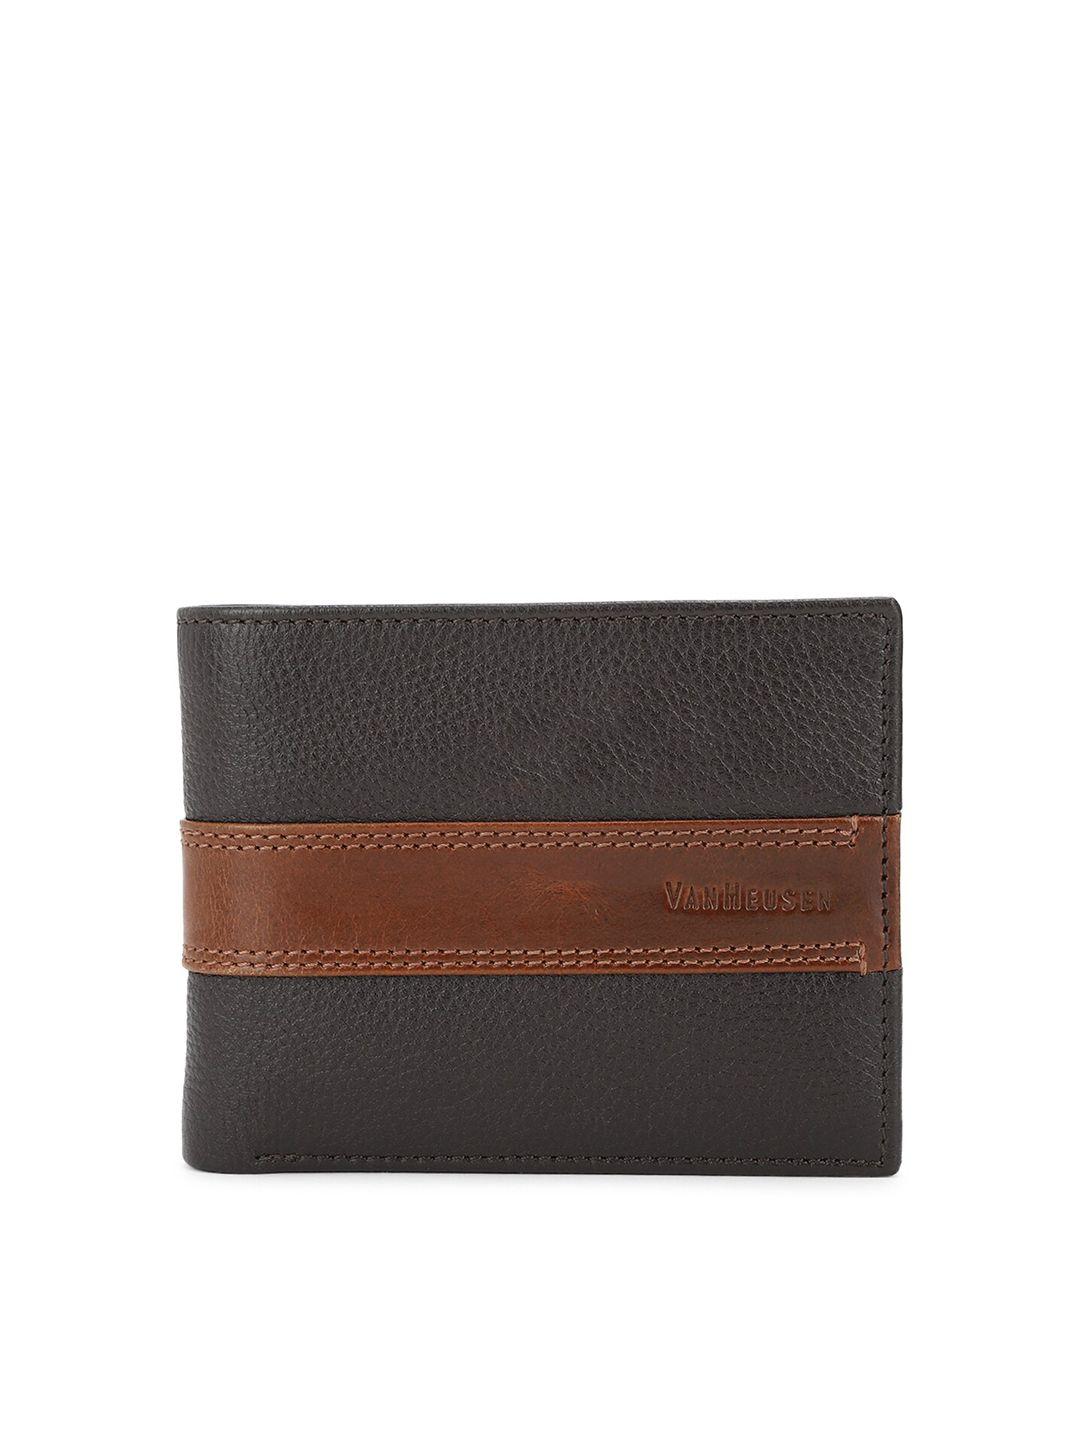 van heusen men black & brown striped leather two fold wallet